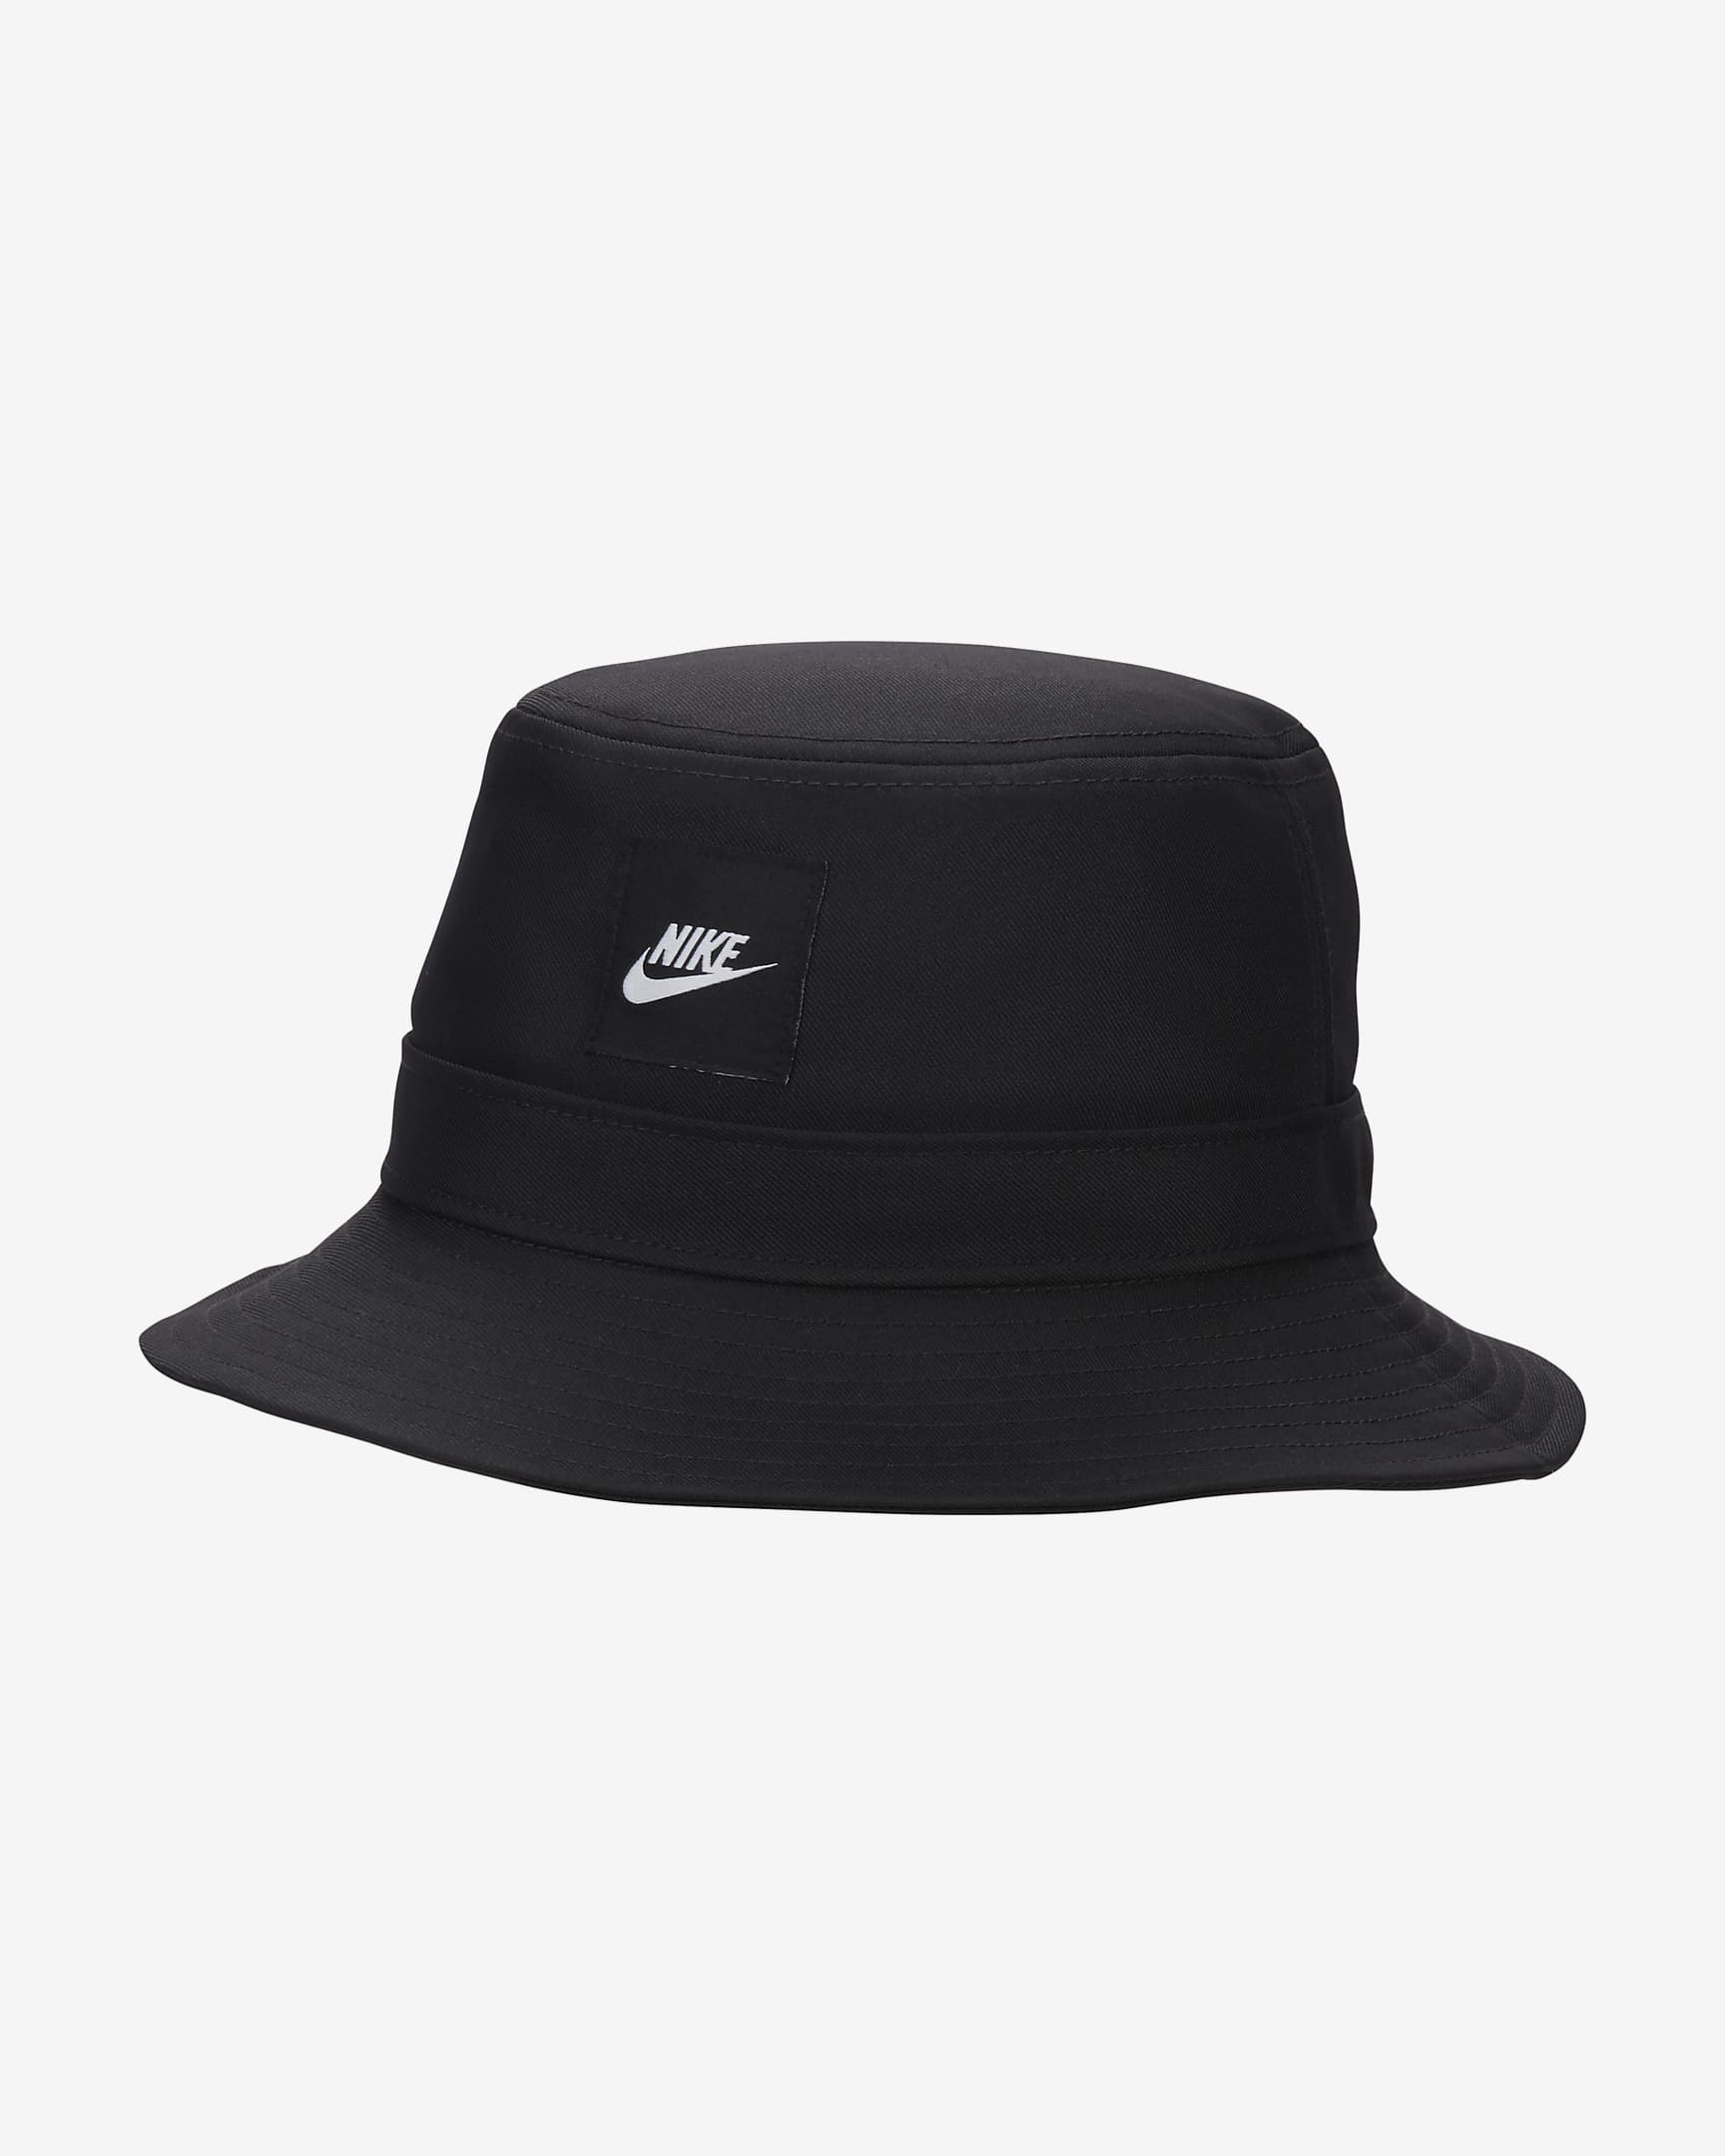 Dětský klobouk Nike Apex Futura - Černá/Bílá